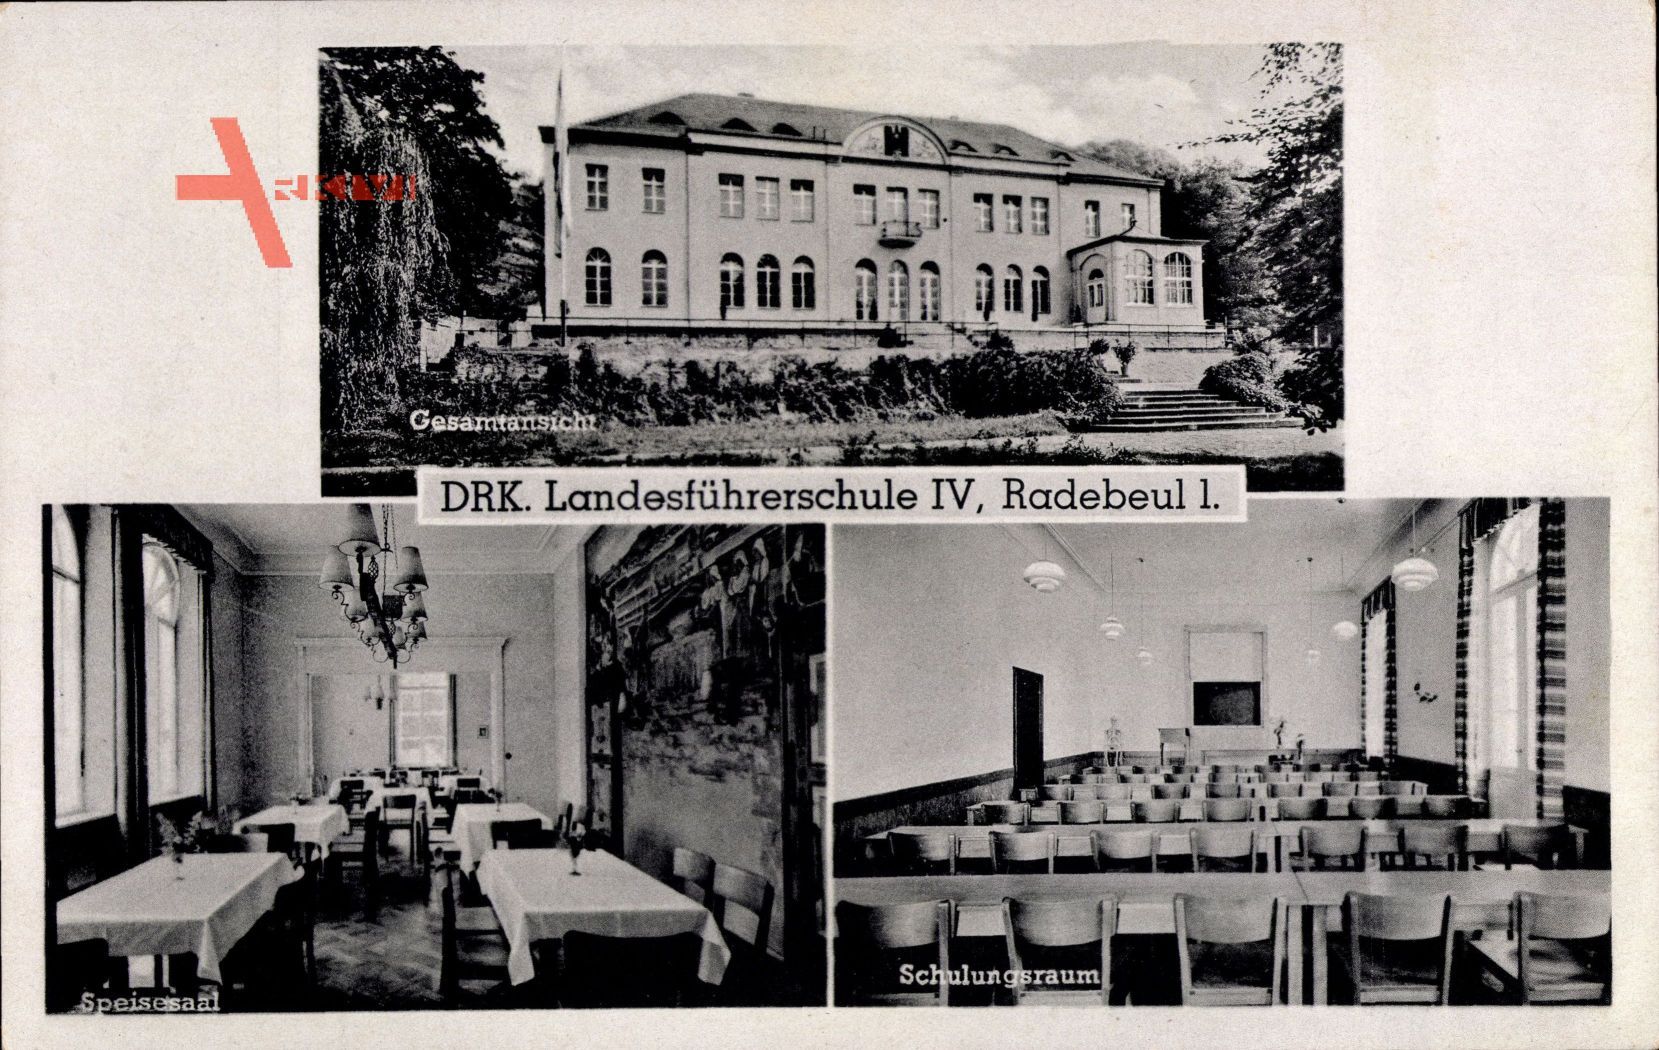 Radebeul, DRK, Landesführerschule IV., Schulungsraum, Speisesaal